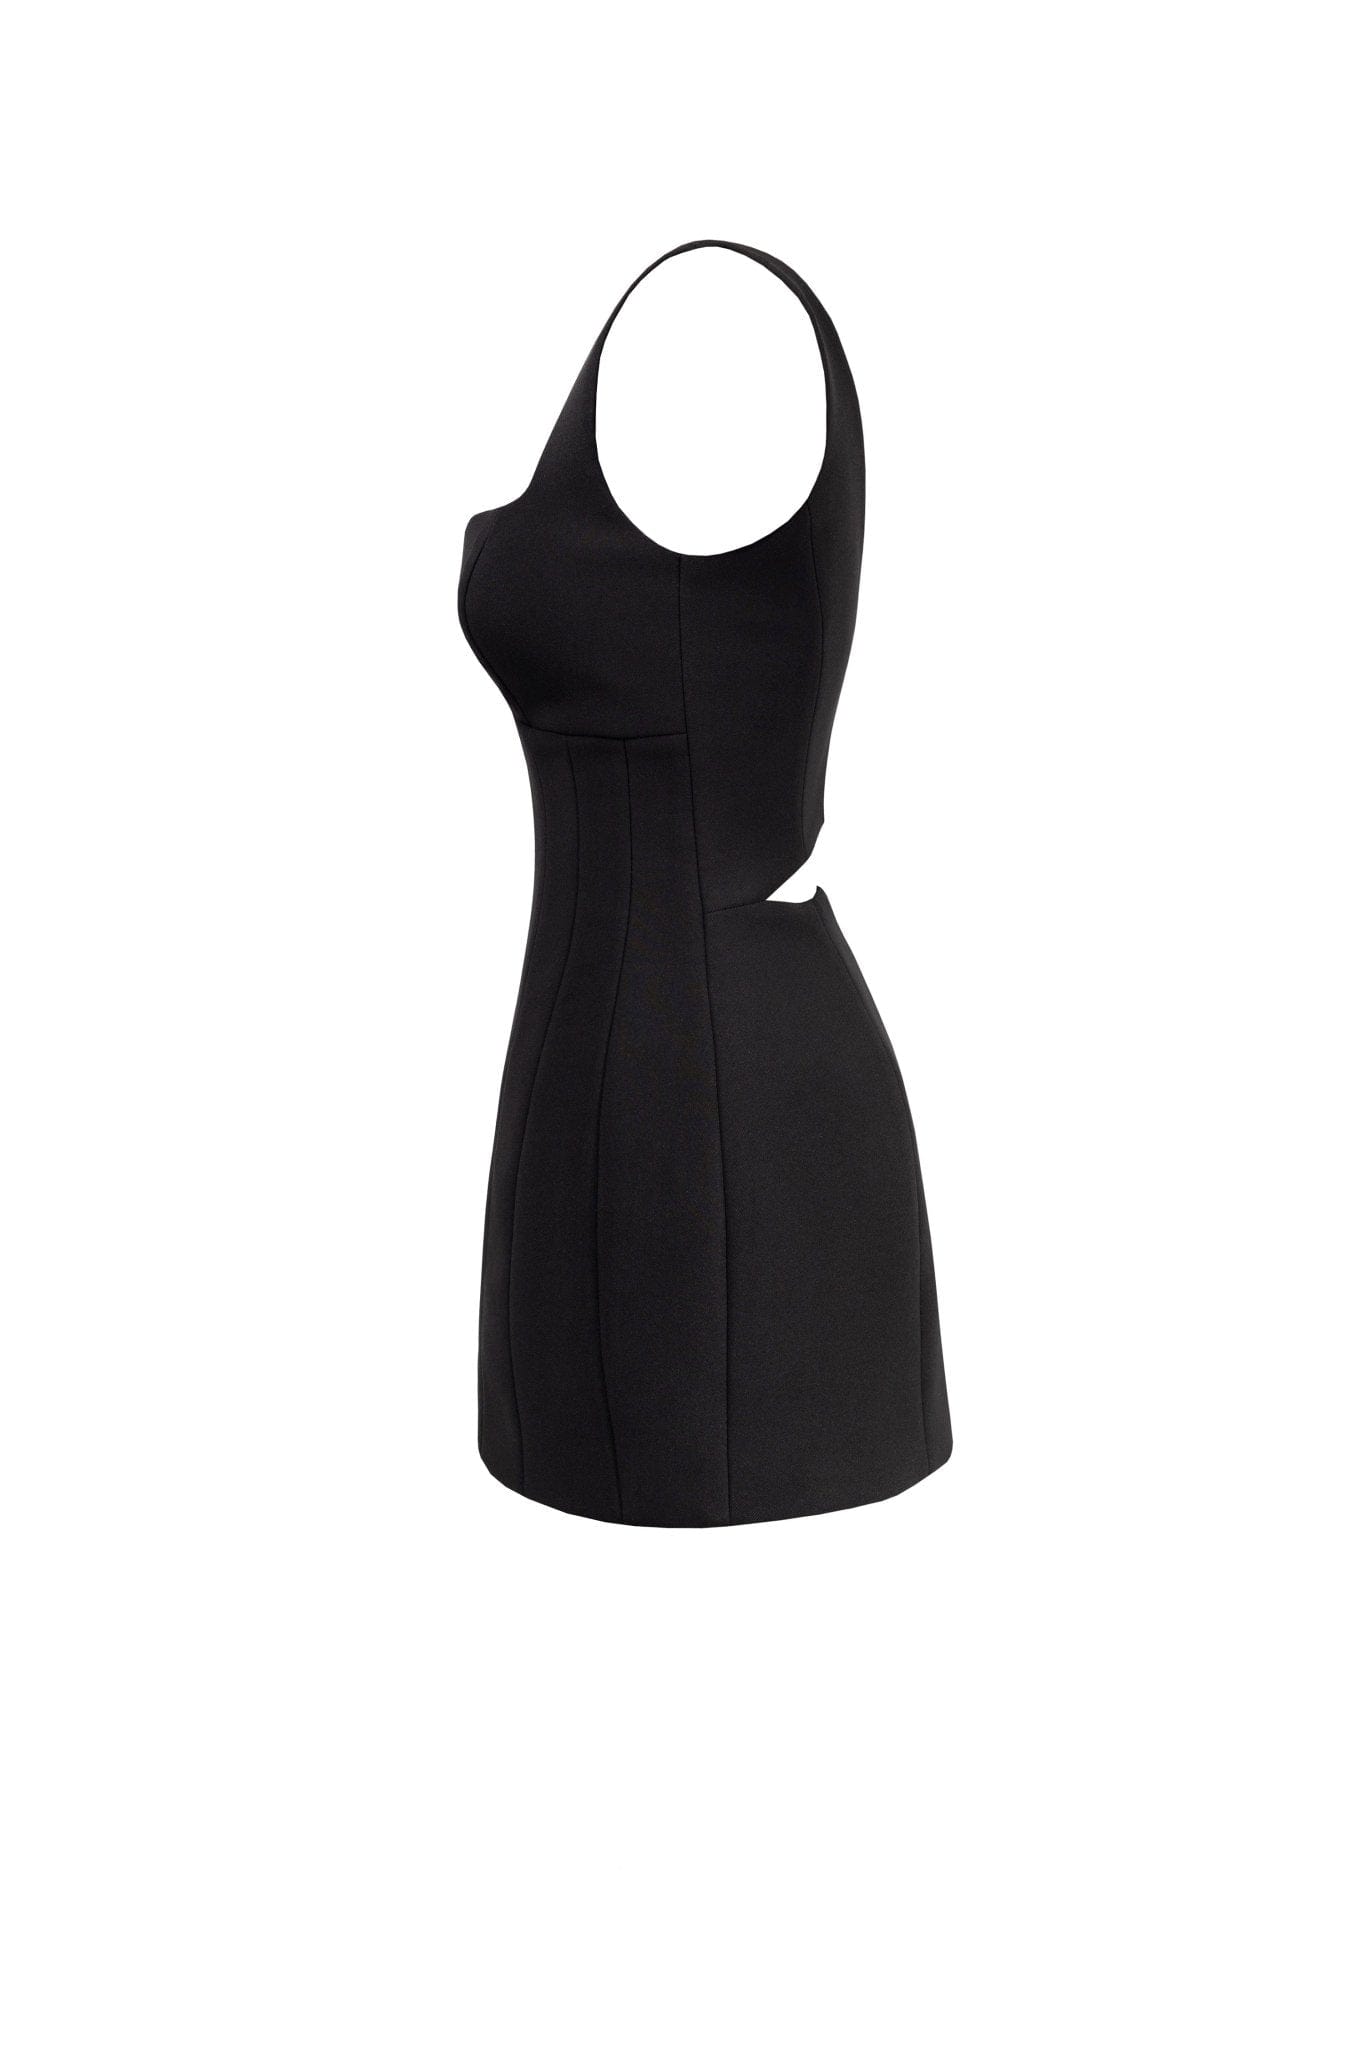 Glossy ultra mini dress in black with cutouts - Milla